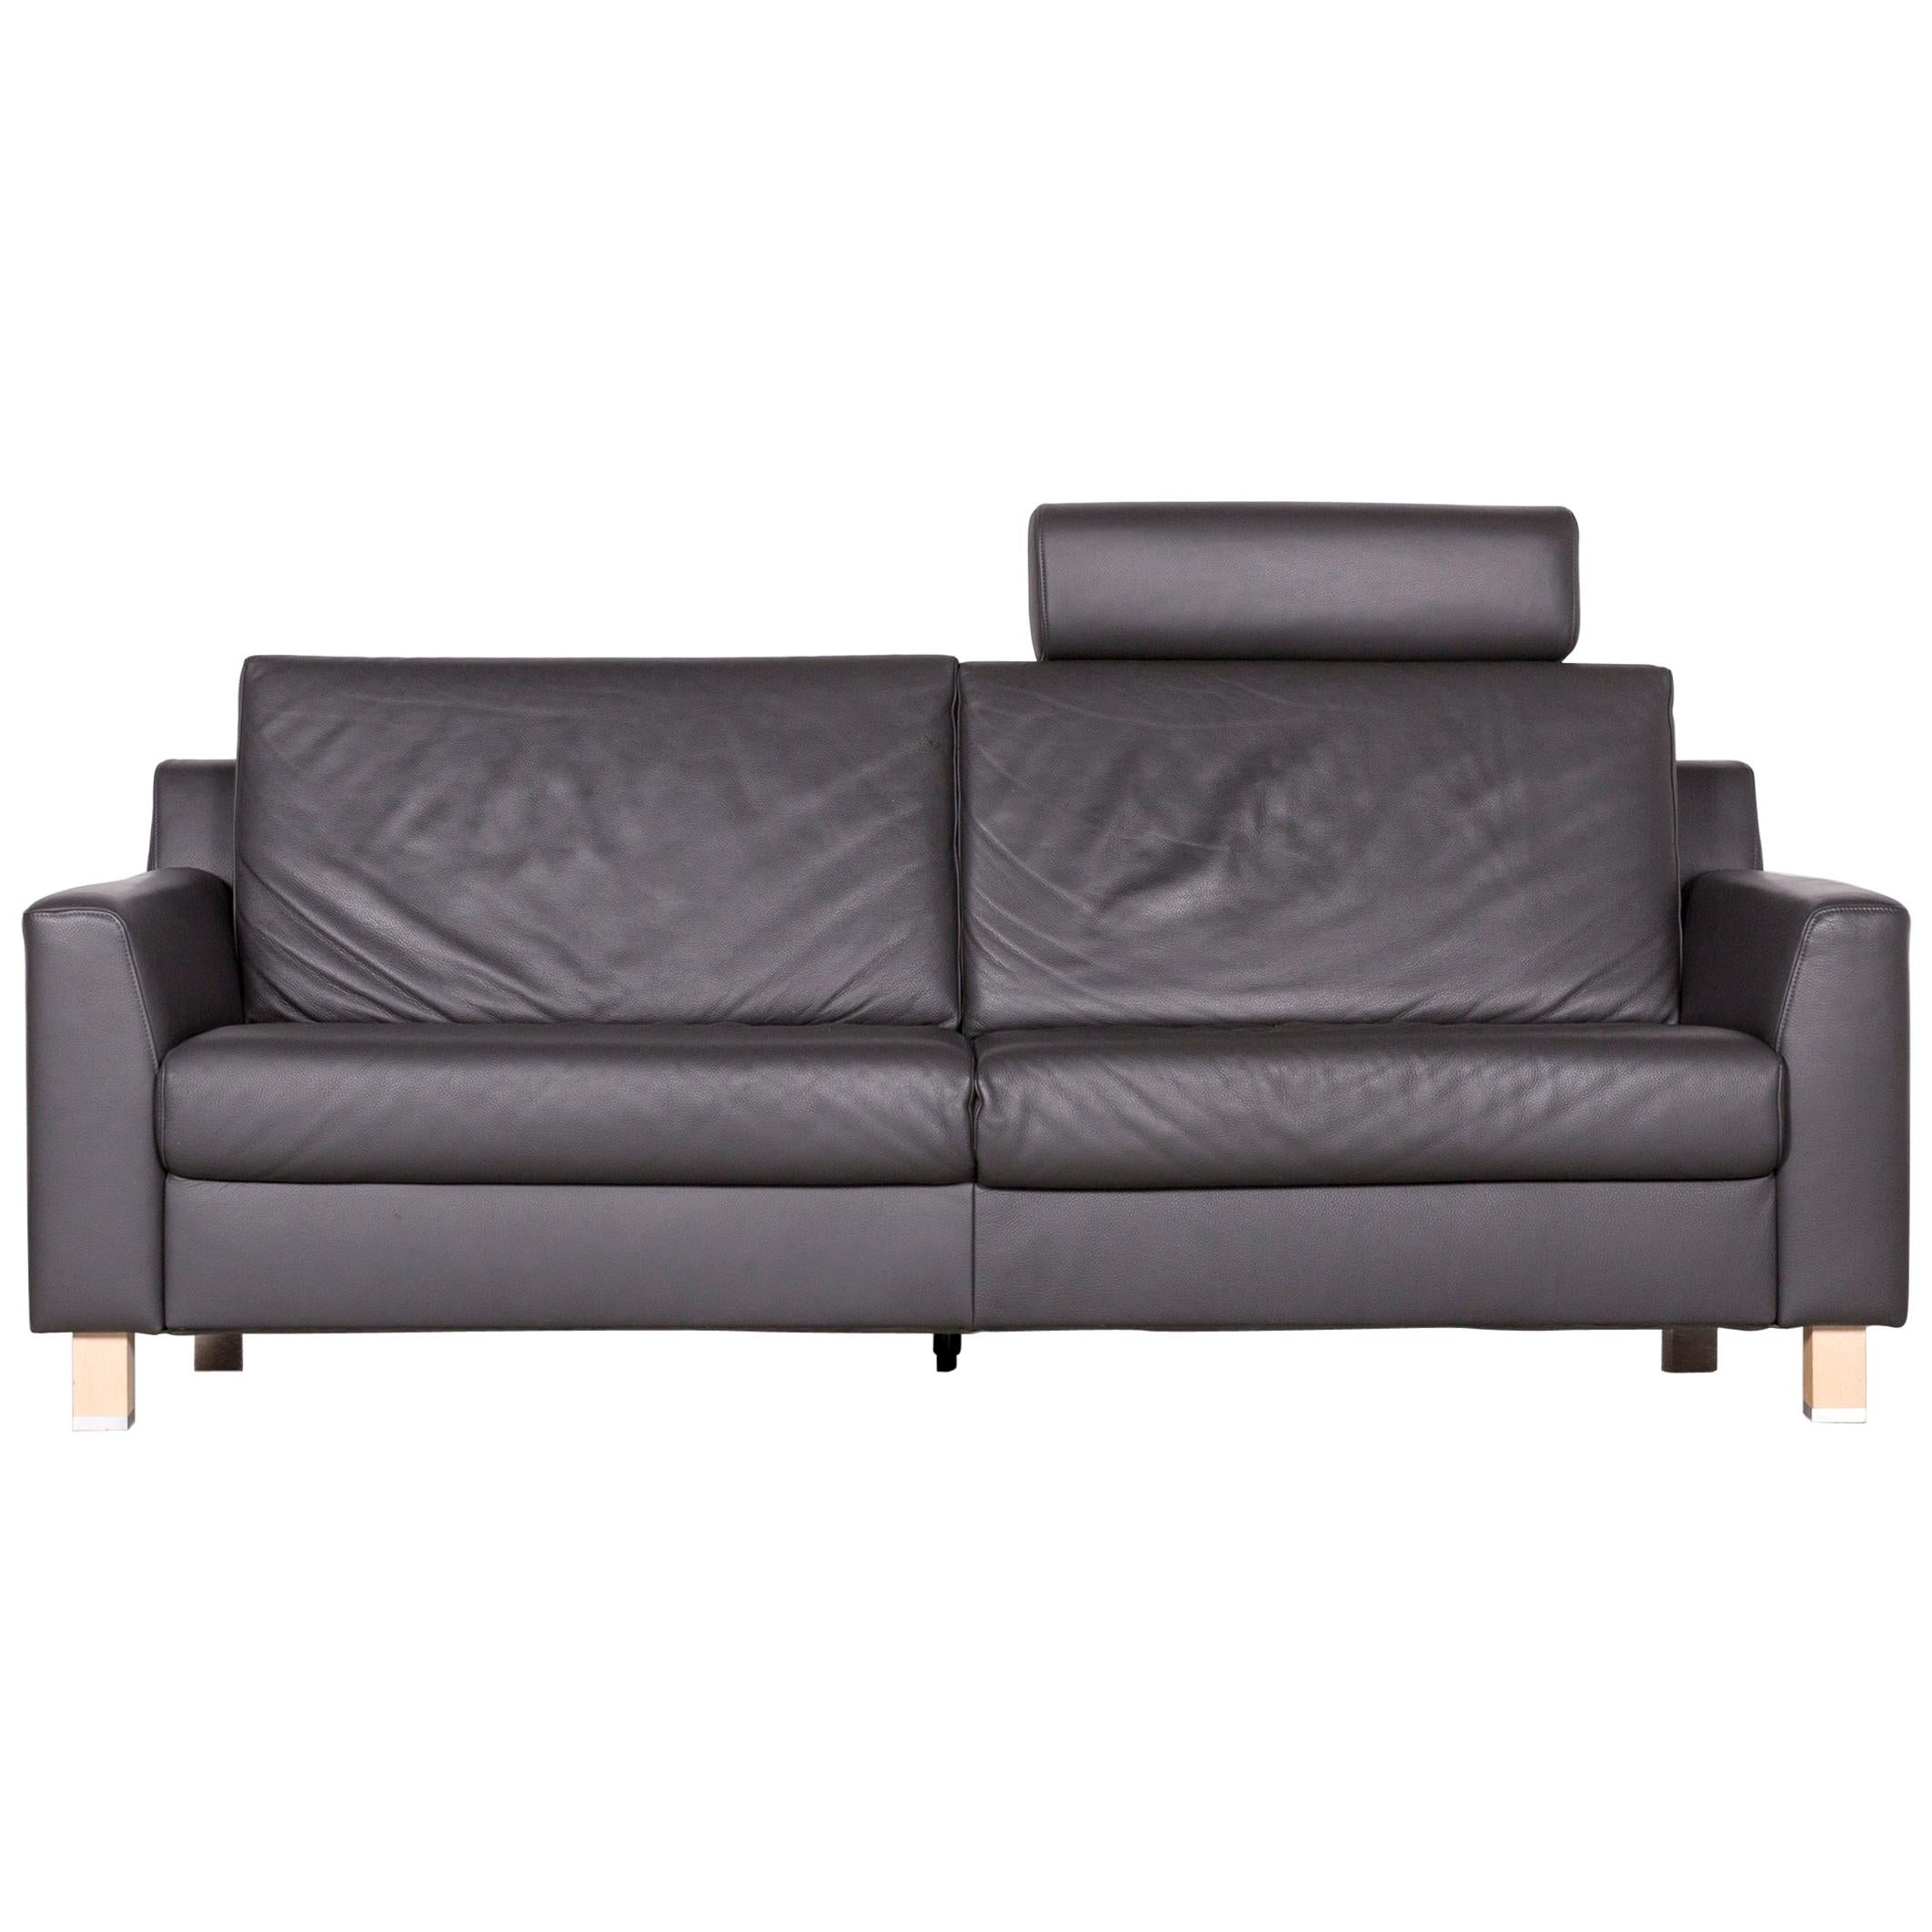 Ewald Schillig Flex Plus Designer Leather Sofa Grey Three-Seat Couch For Sale